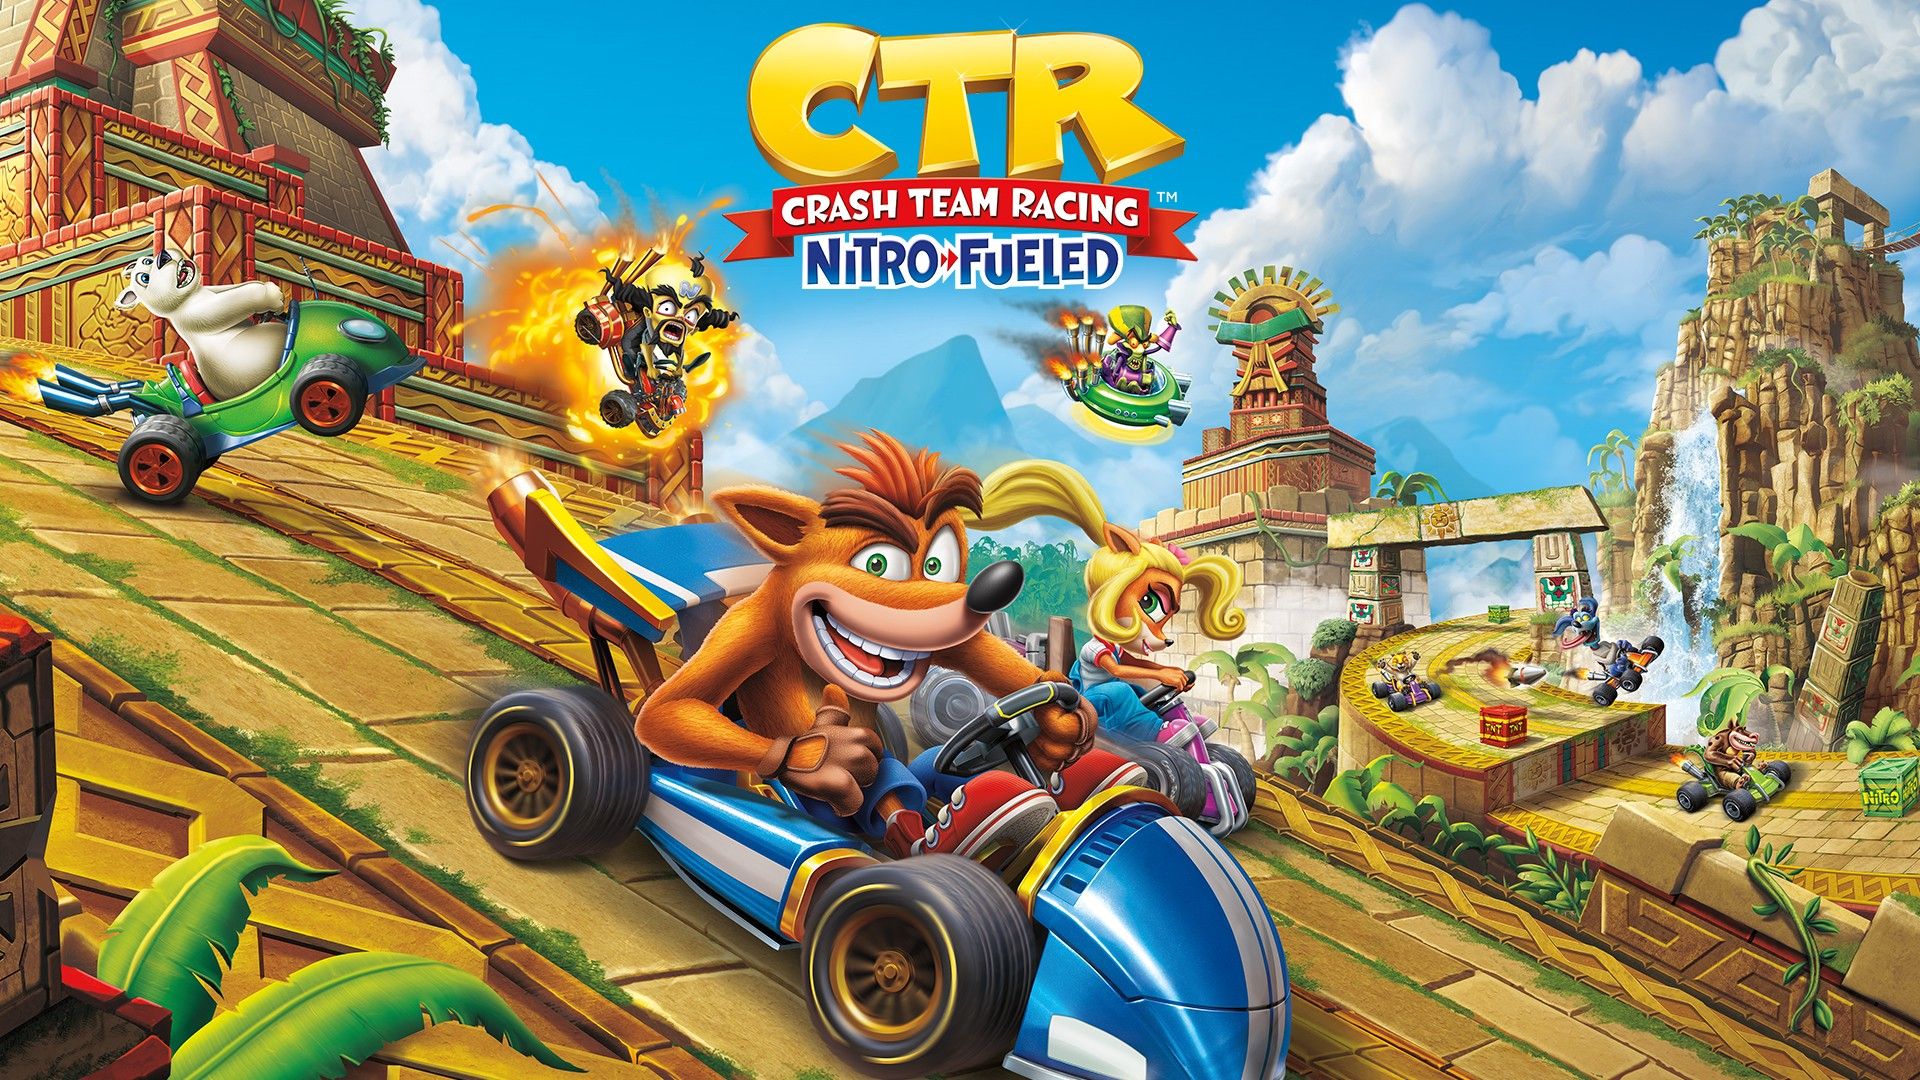 Crash Team Racing key art showing Crash Bandicoot and friends racing.